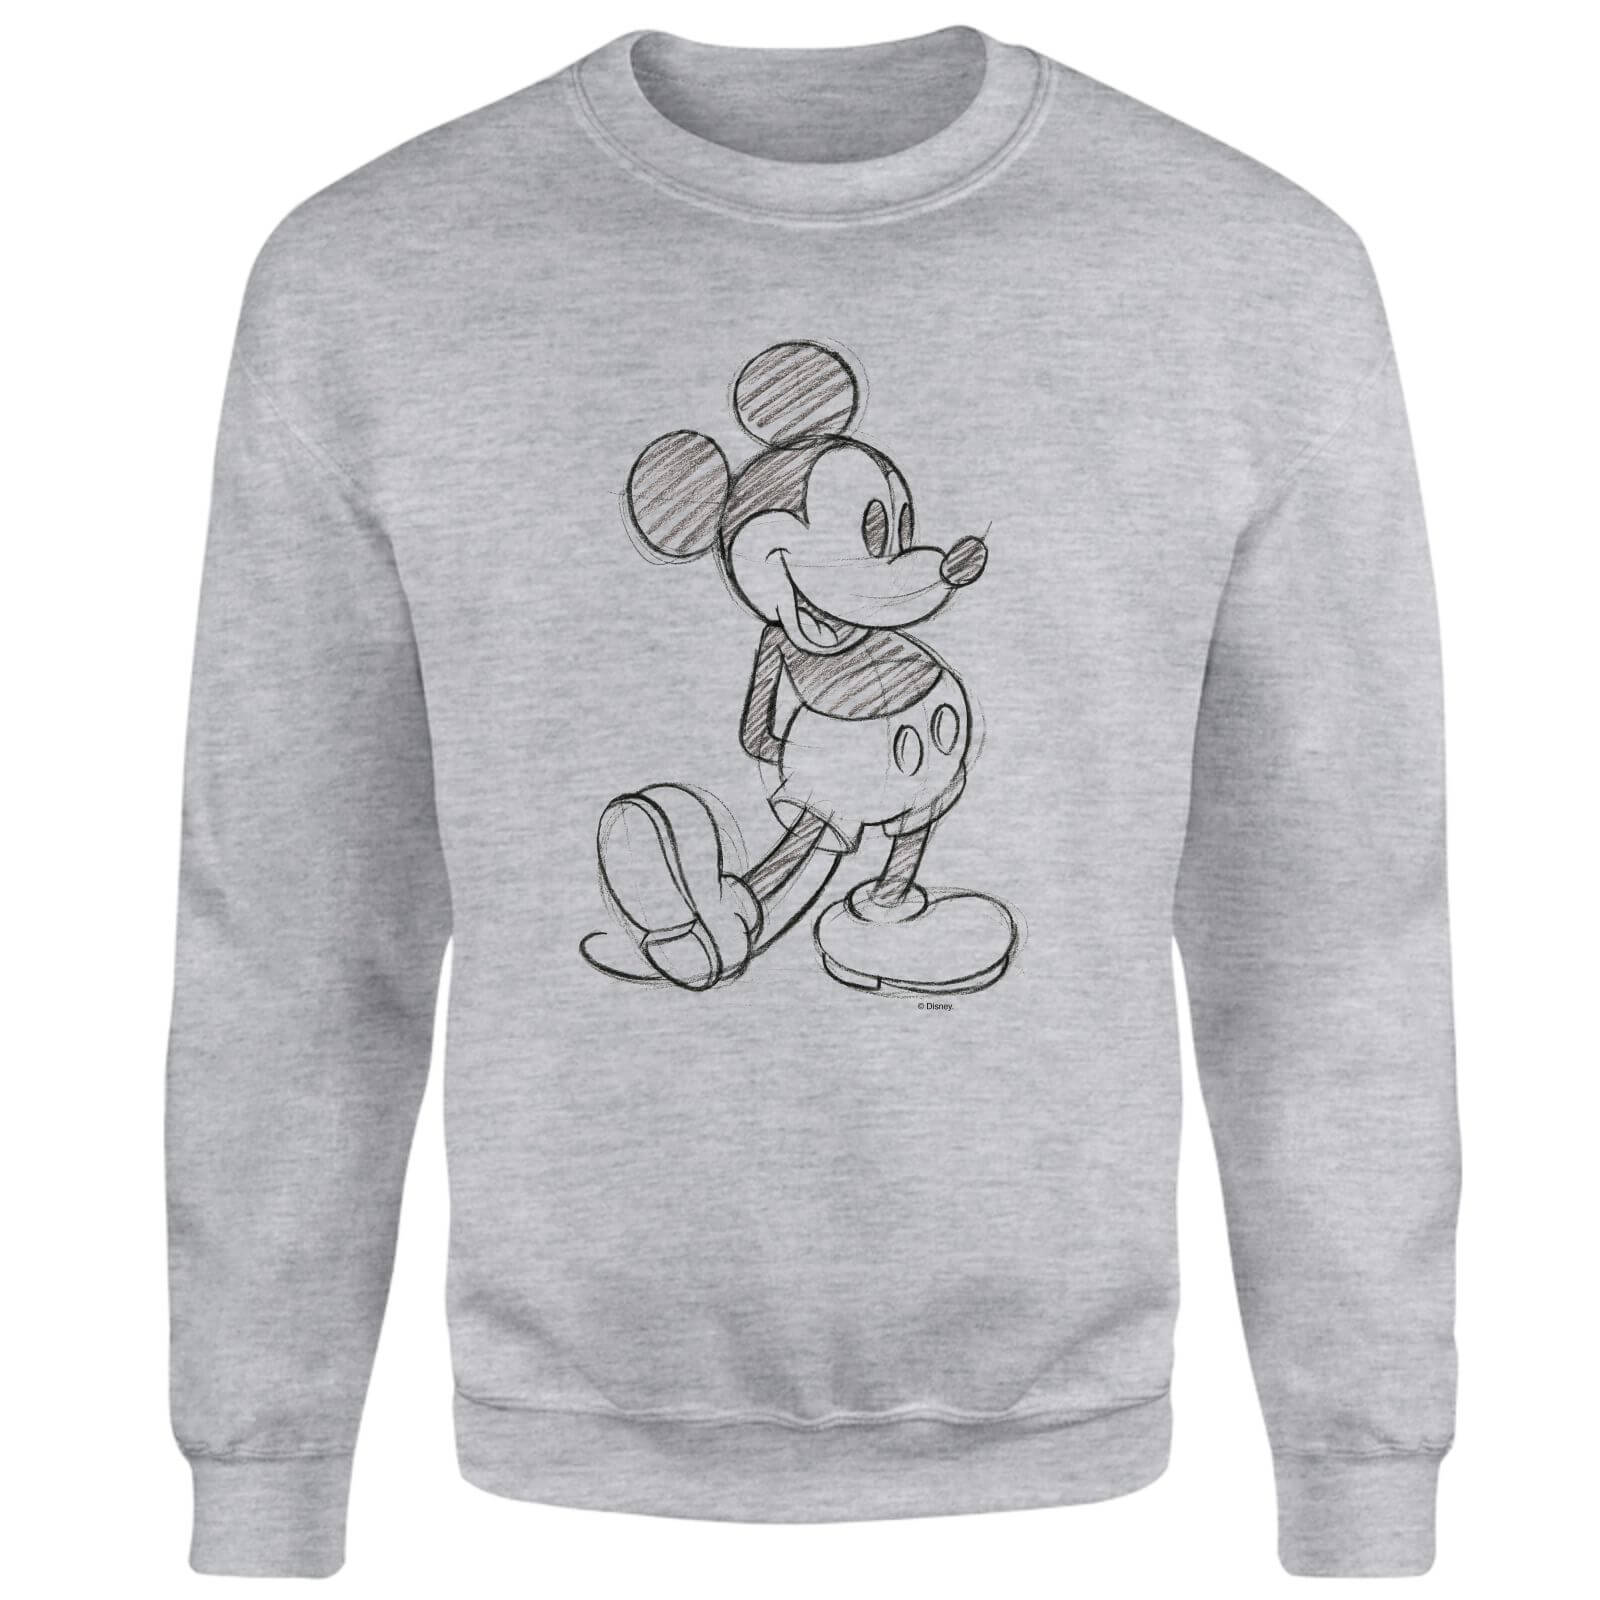 Disney Mickey Mouse Sketch Sweatshirt - Grey - XL - Grey